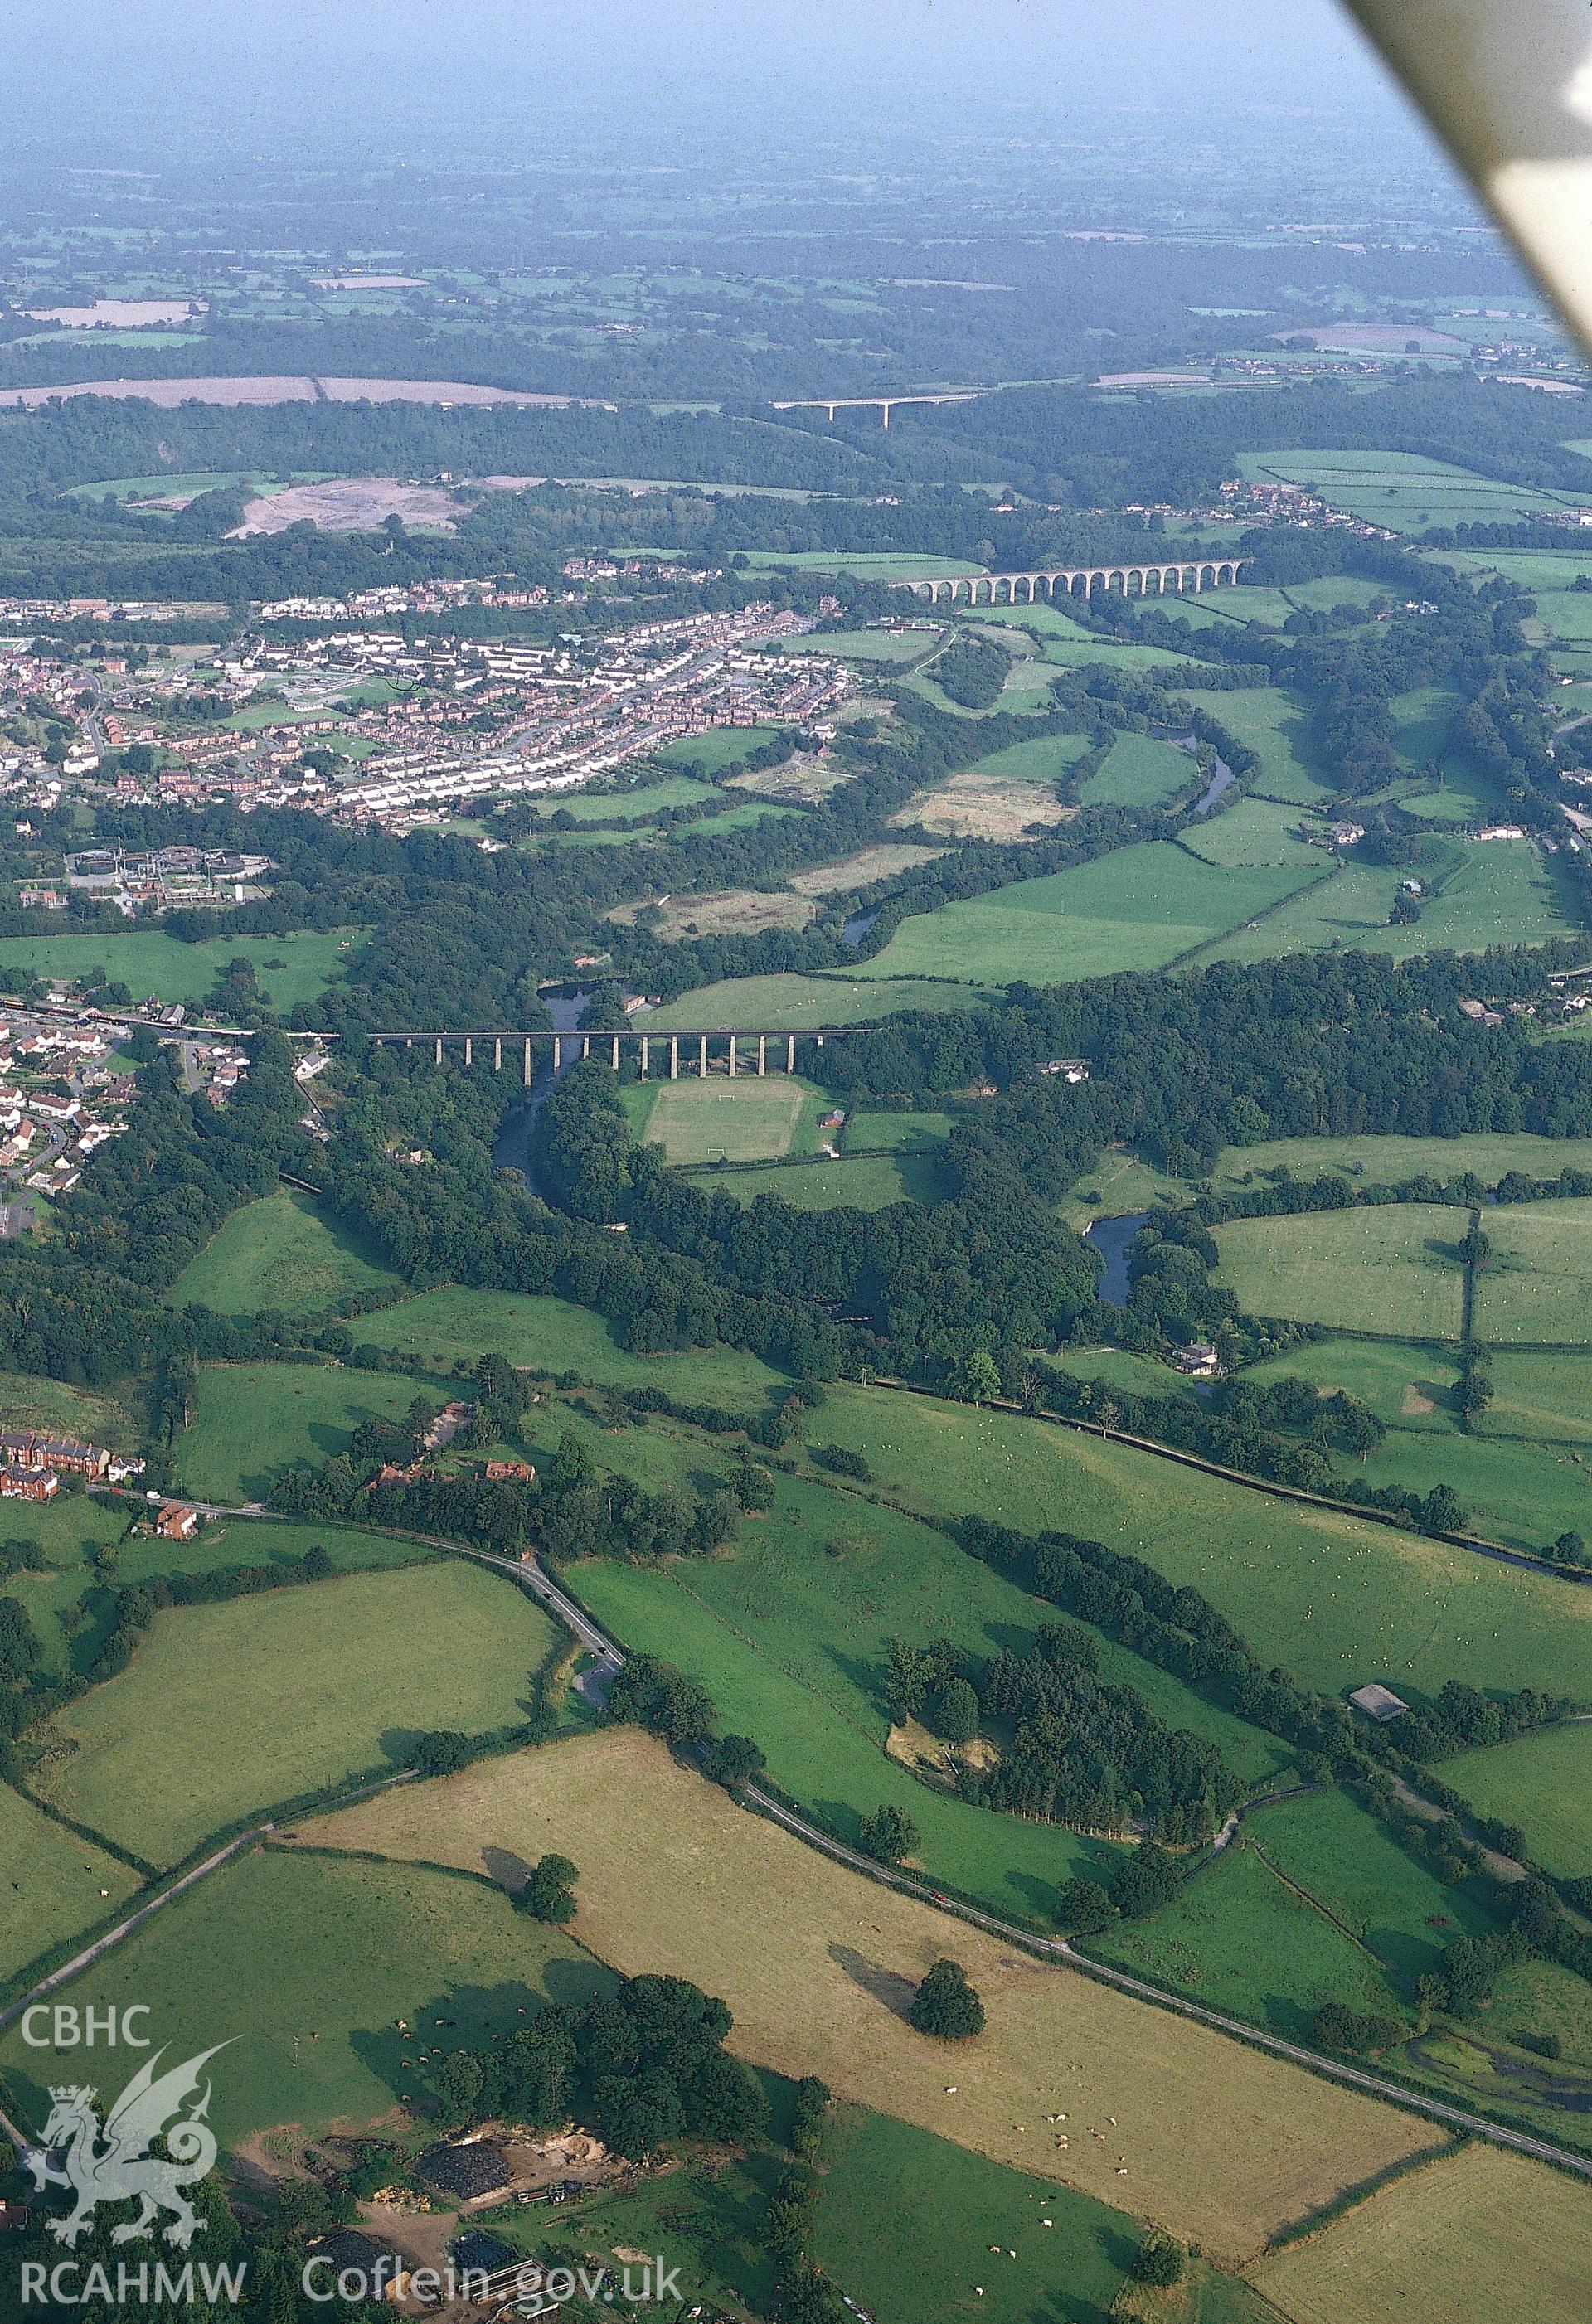 Slide of RCAHMW colour oblique aerial photograph of Pontcysyllte Aqueduct, taken by Toby Driver, 2000.